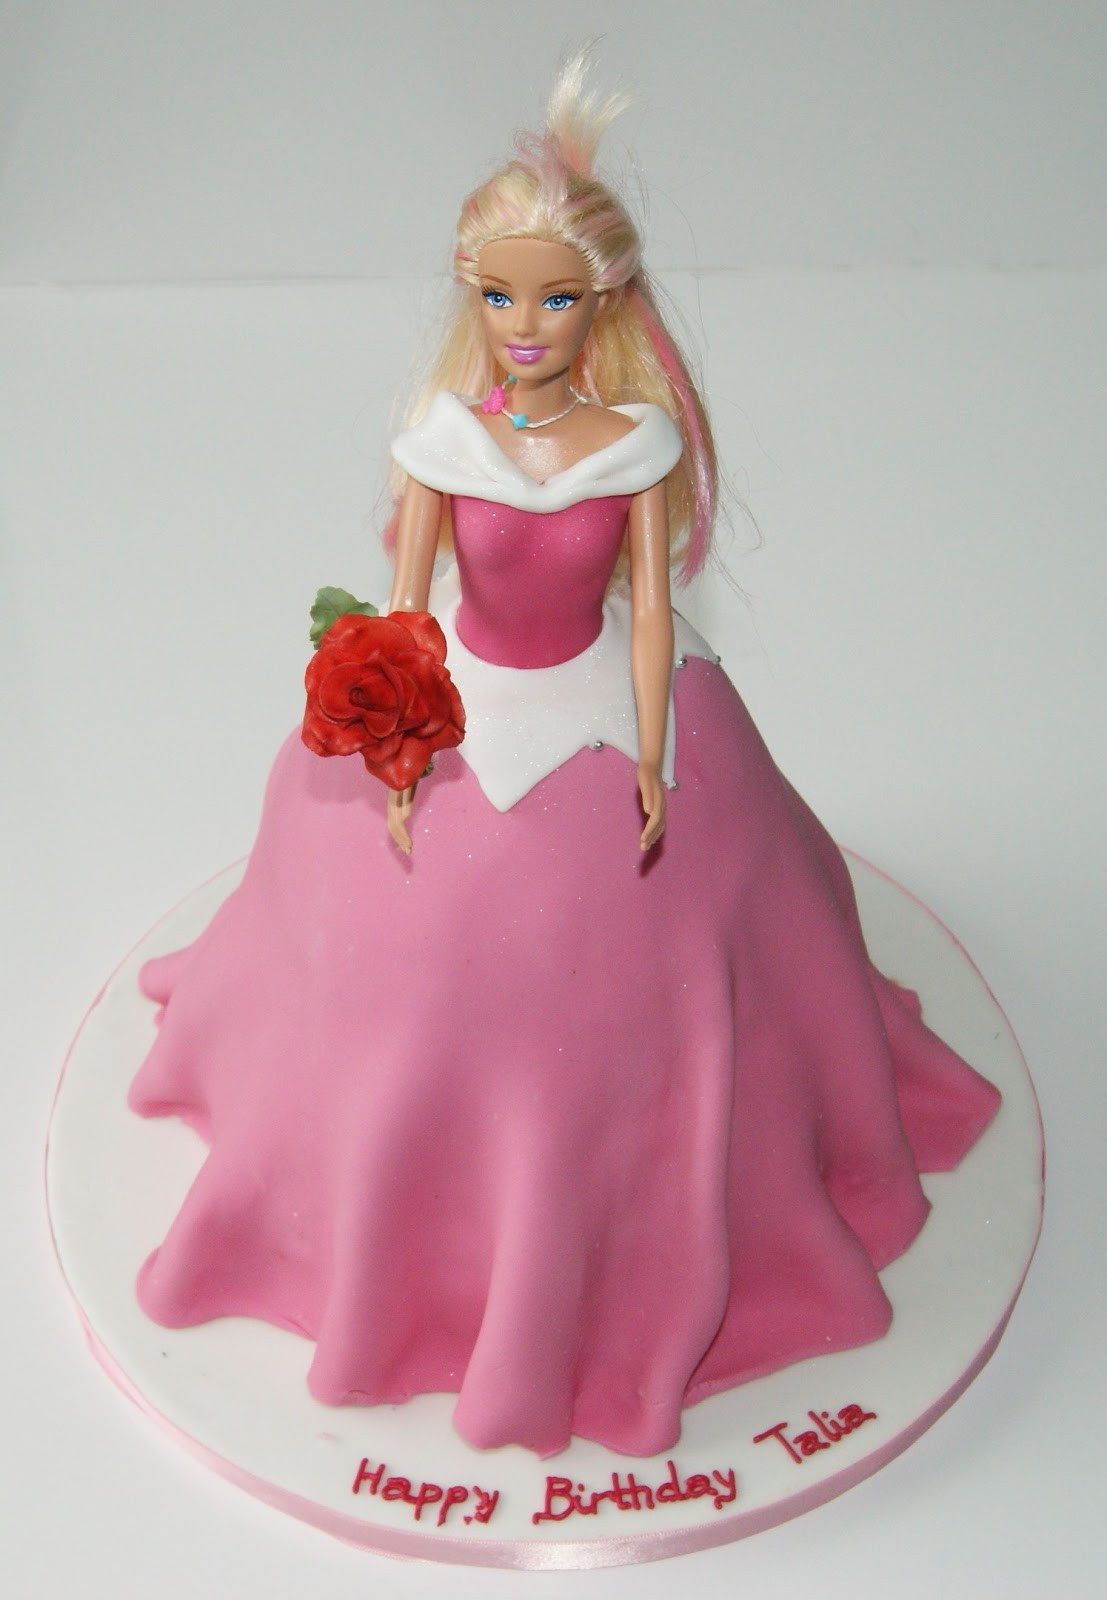 Sleeping Beauty Birthday Cake
 Sleeping Beauty Cakes – Decoration Ideas